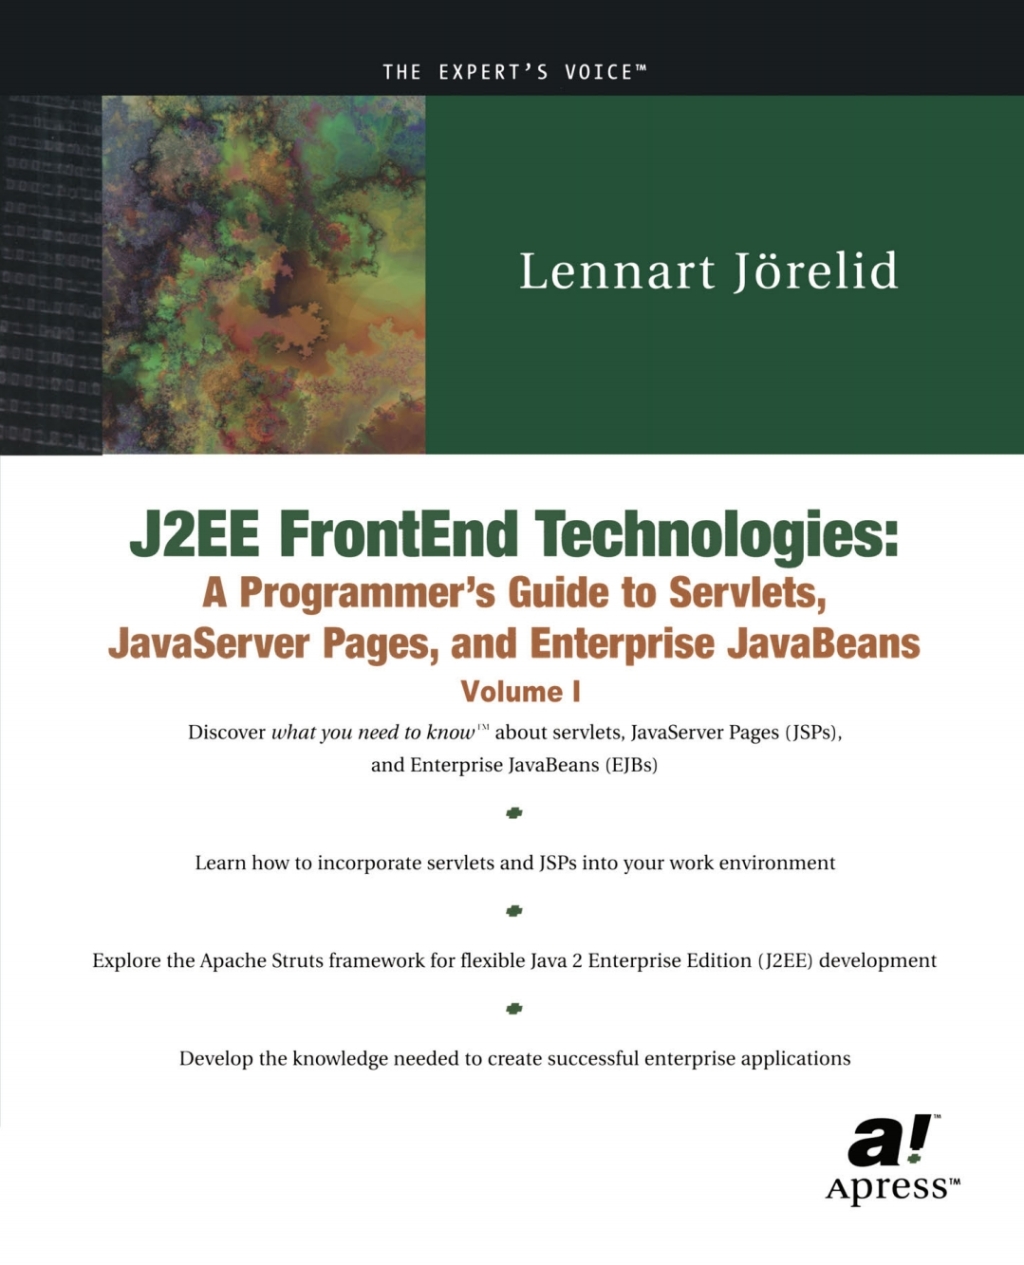 J2EE FrontEnd Technologies (eBook Rental) - Lennart Jorelid,